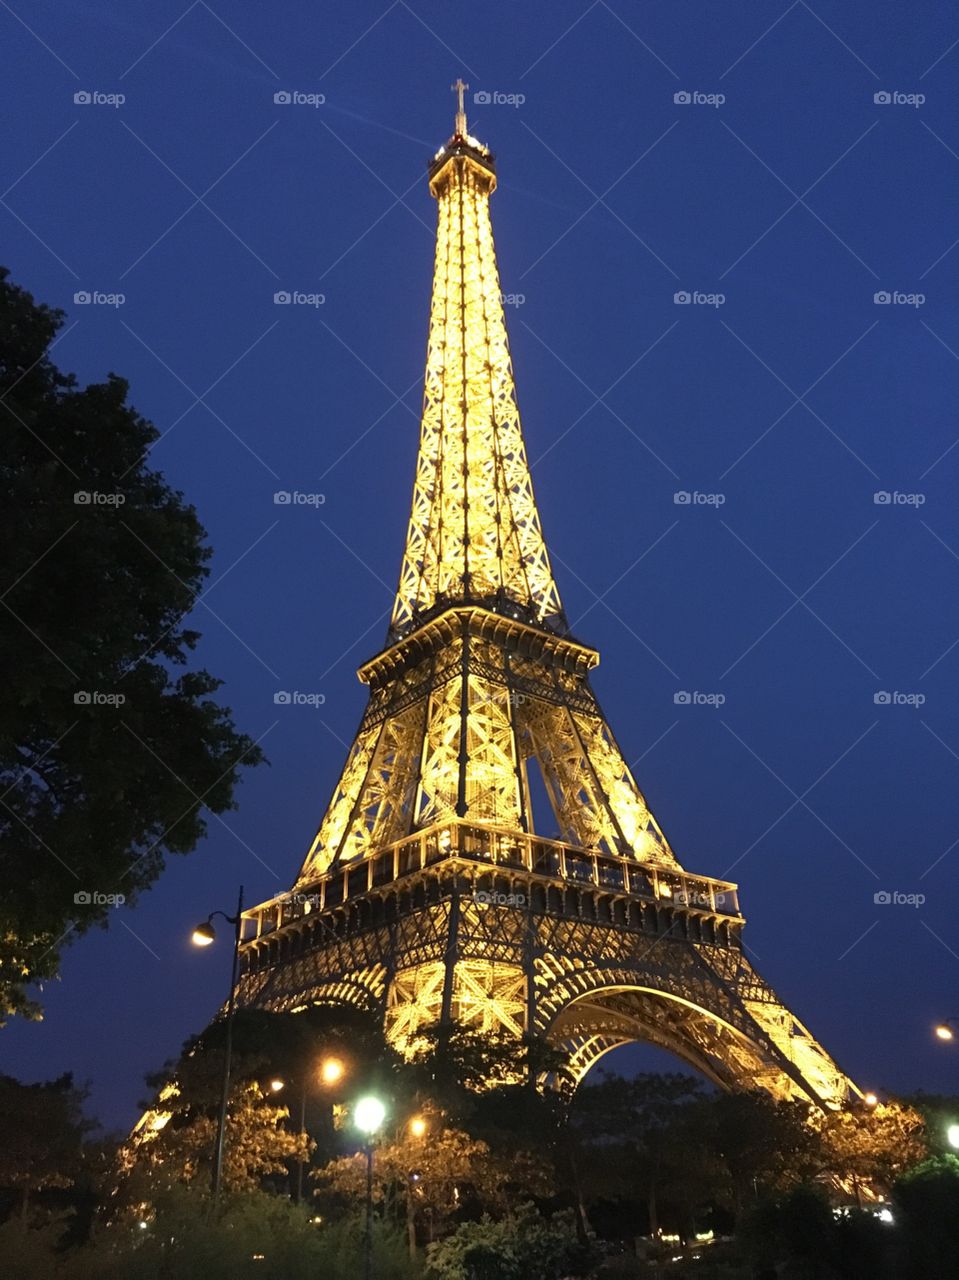 Eiffel Tower at night against blue sky. 